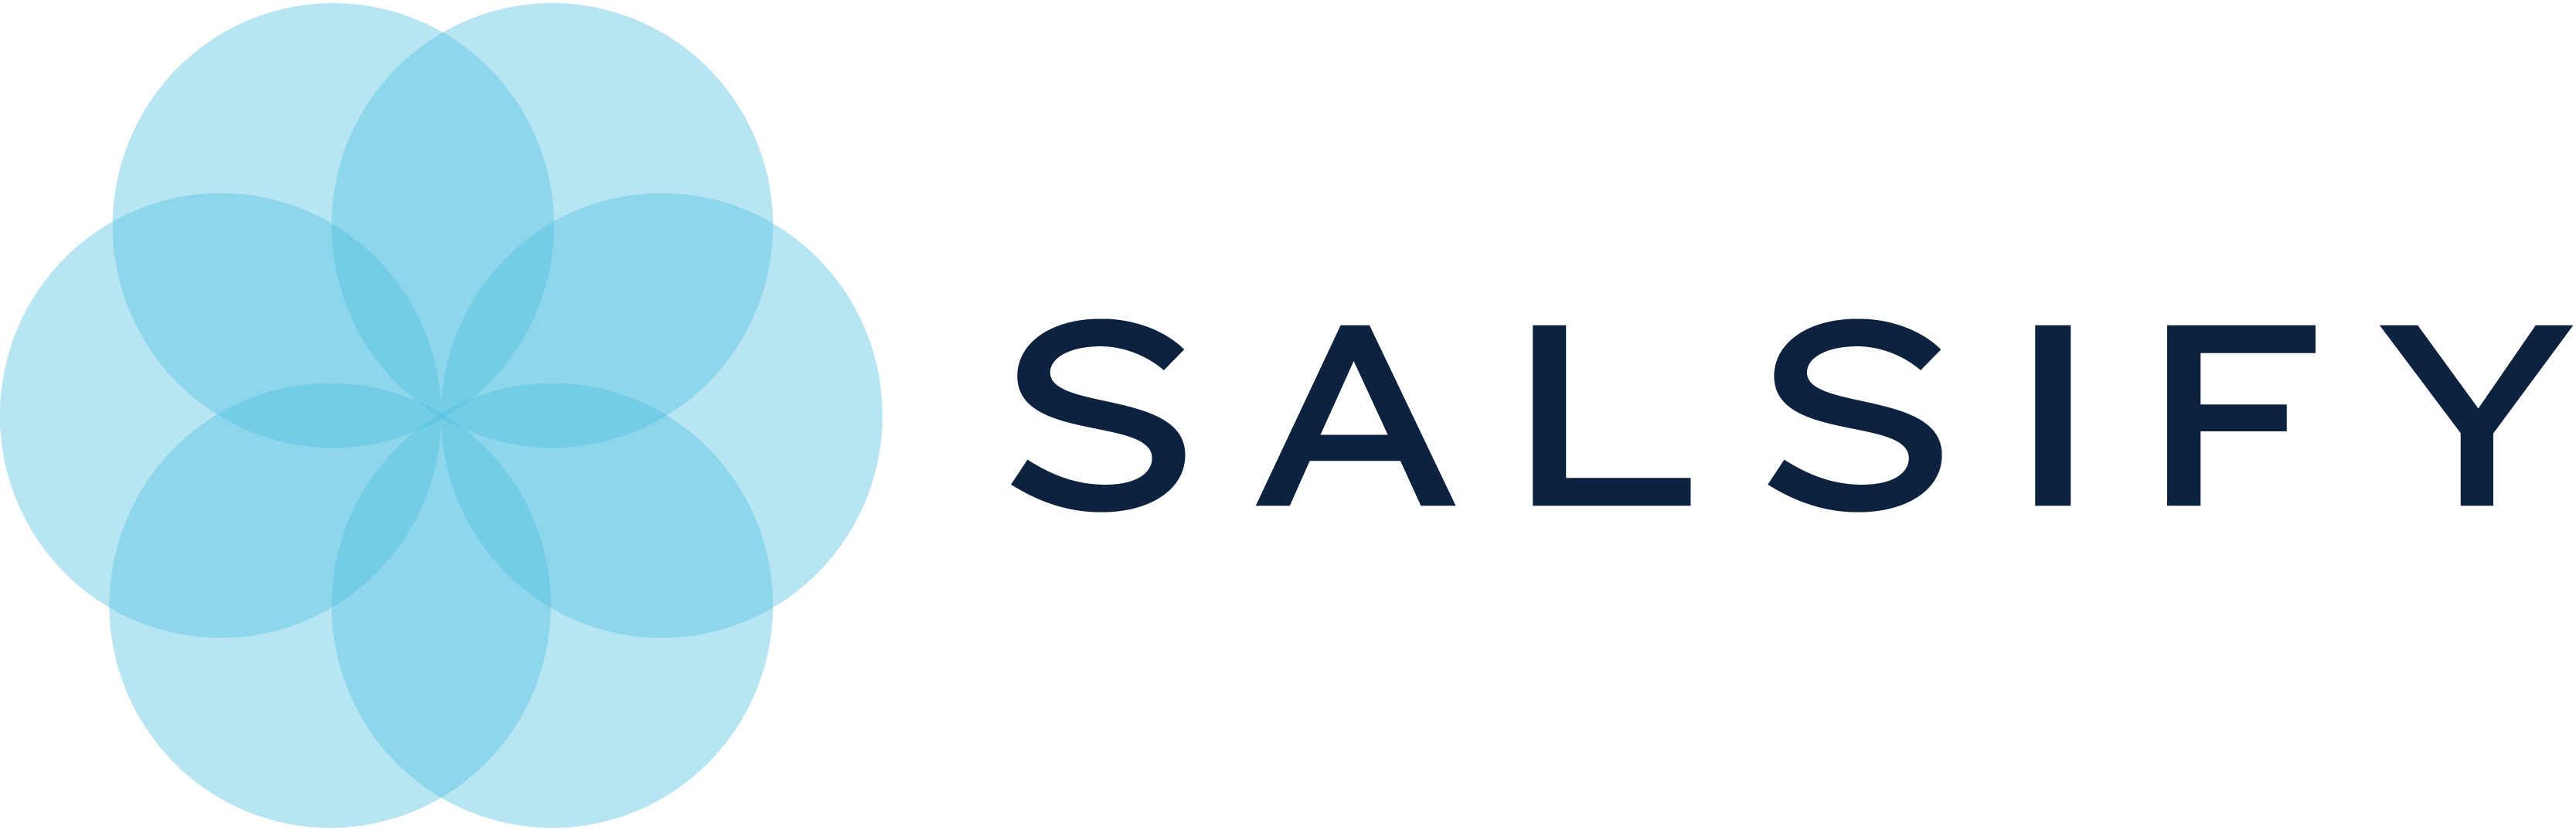 Salsify logo.